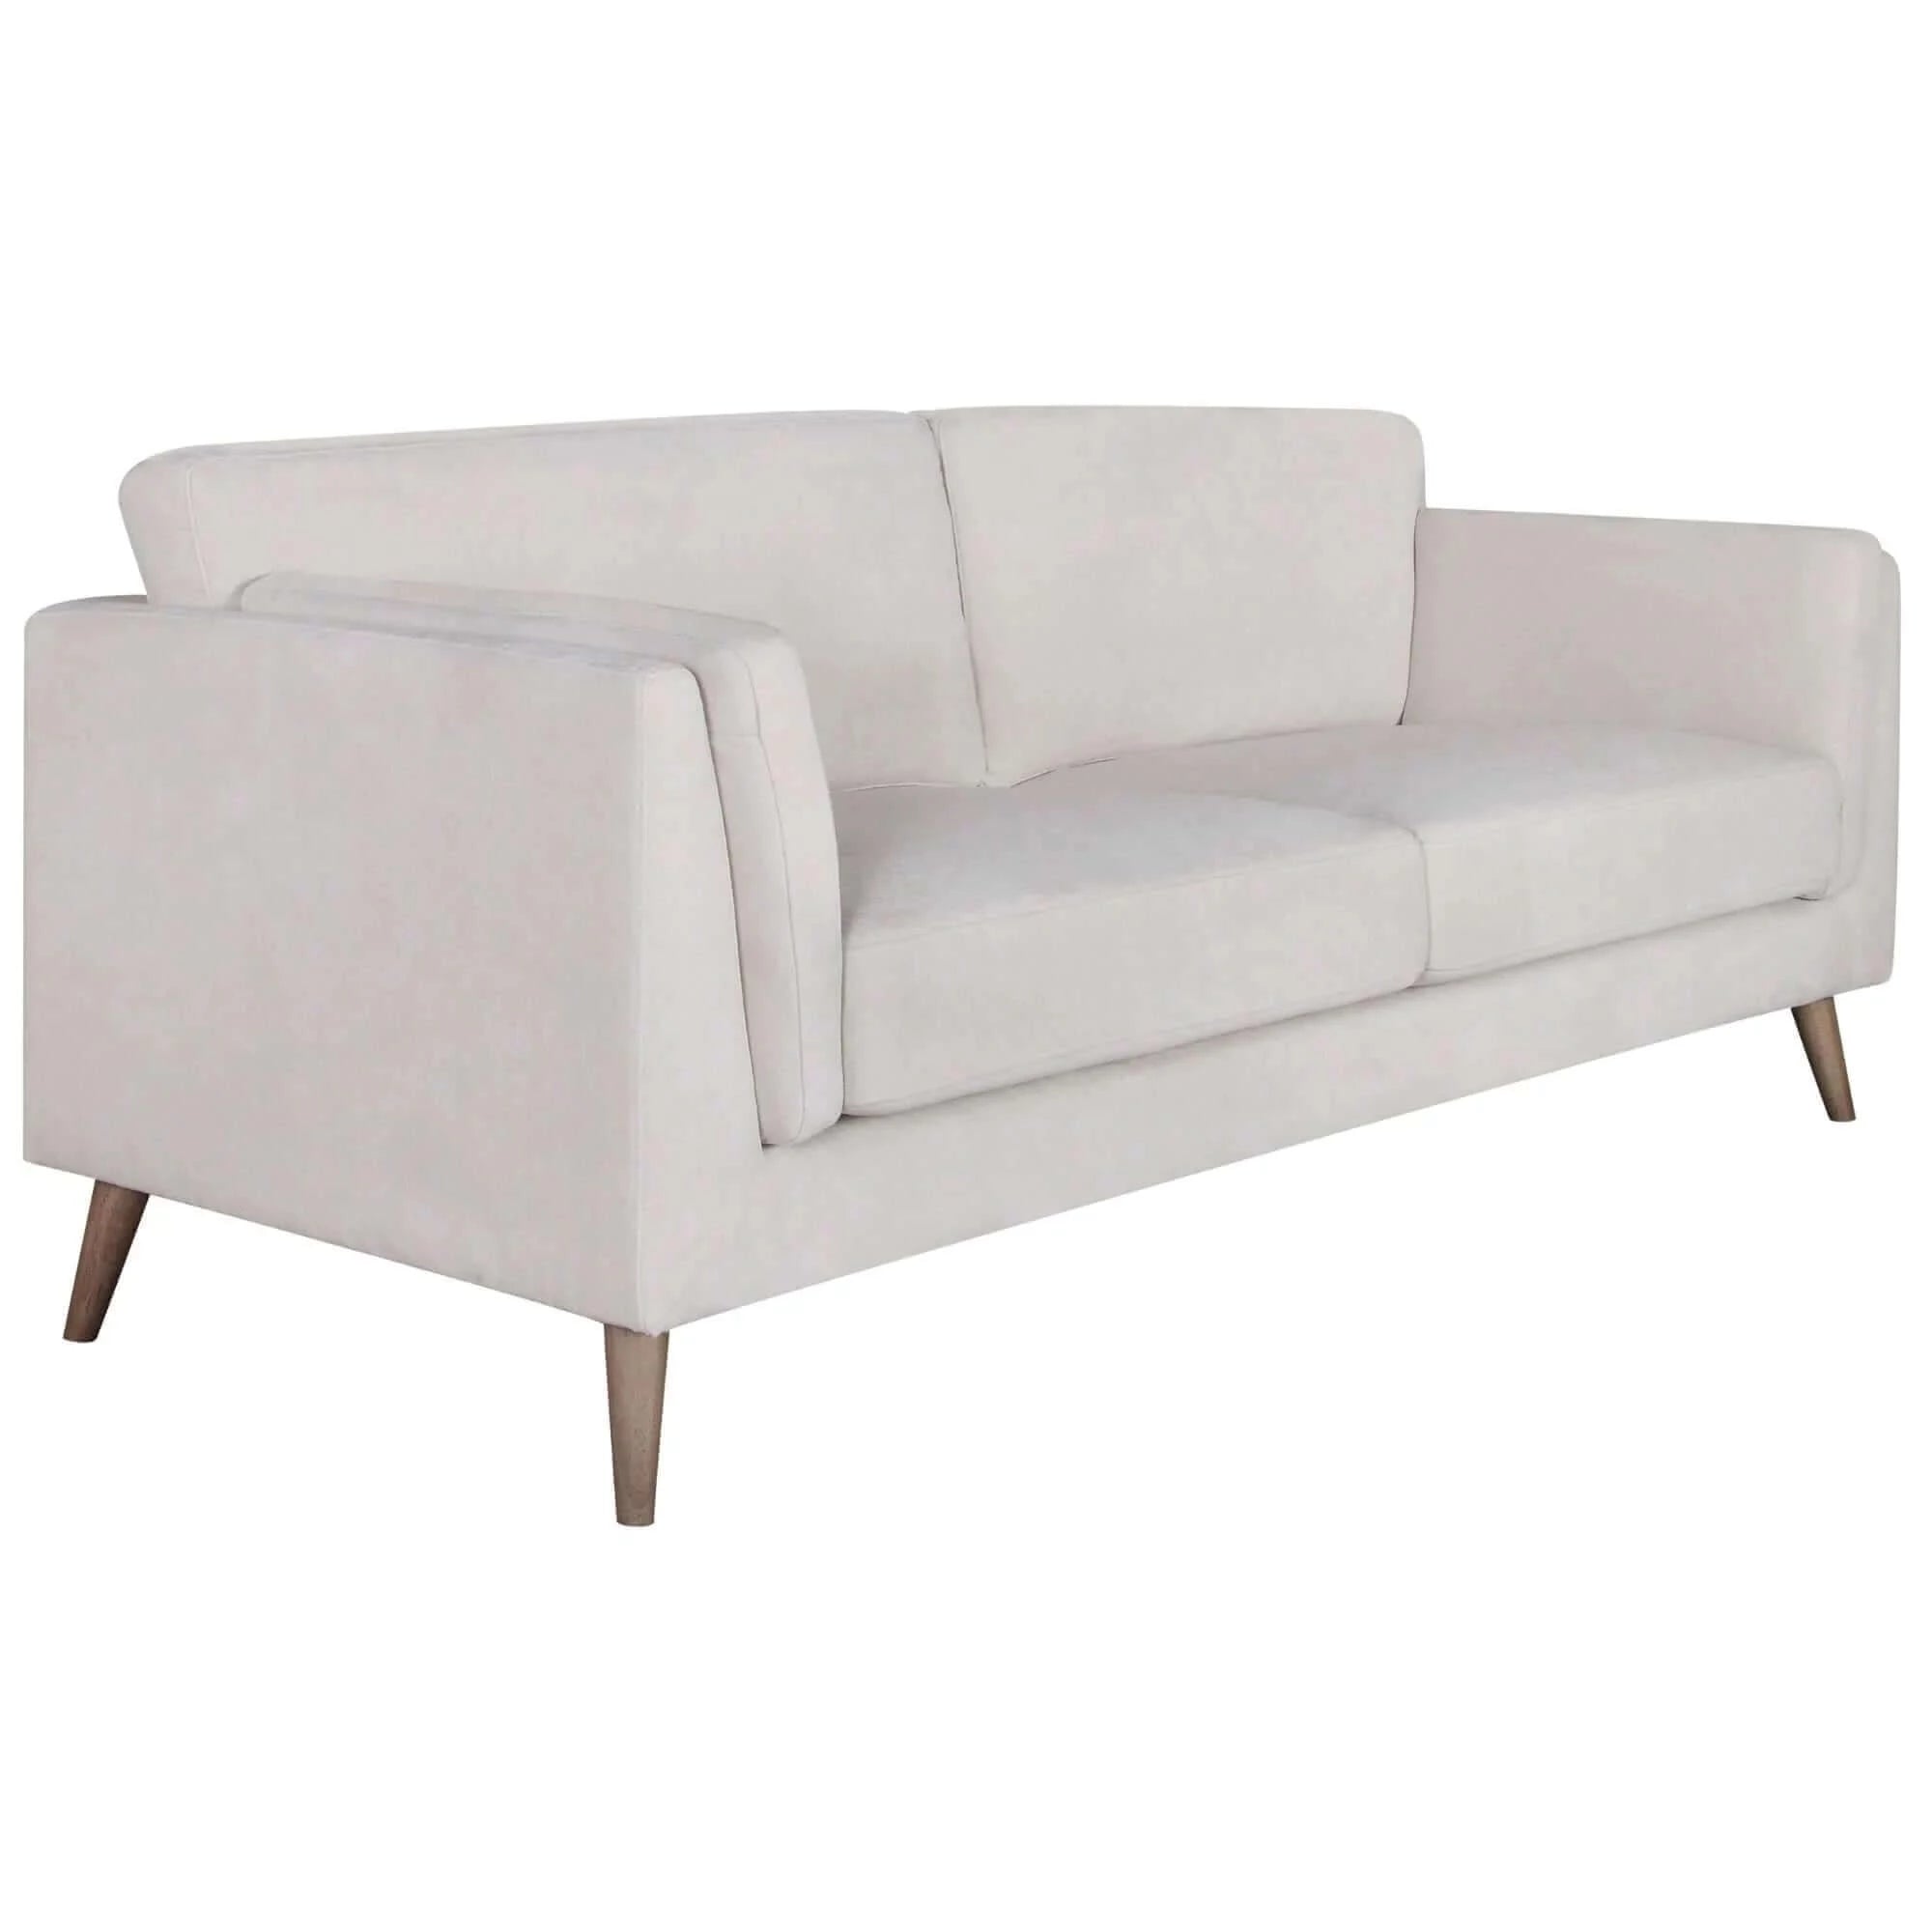 Buy nooa 3 seater sofa fabric uplholstered lounge couch - stone - upinteriors-Upinteriors